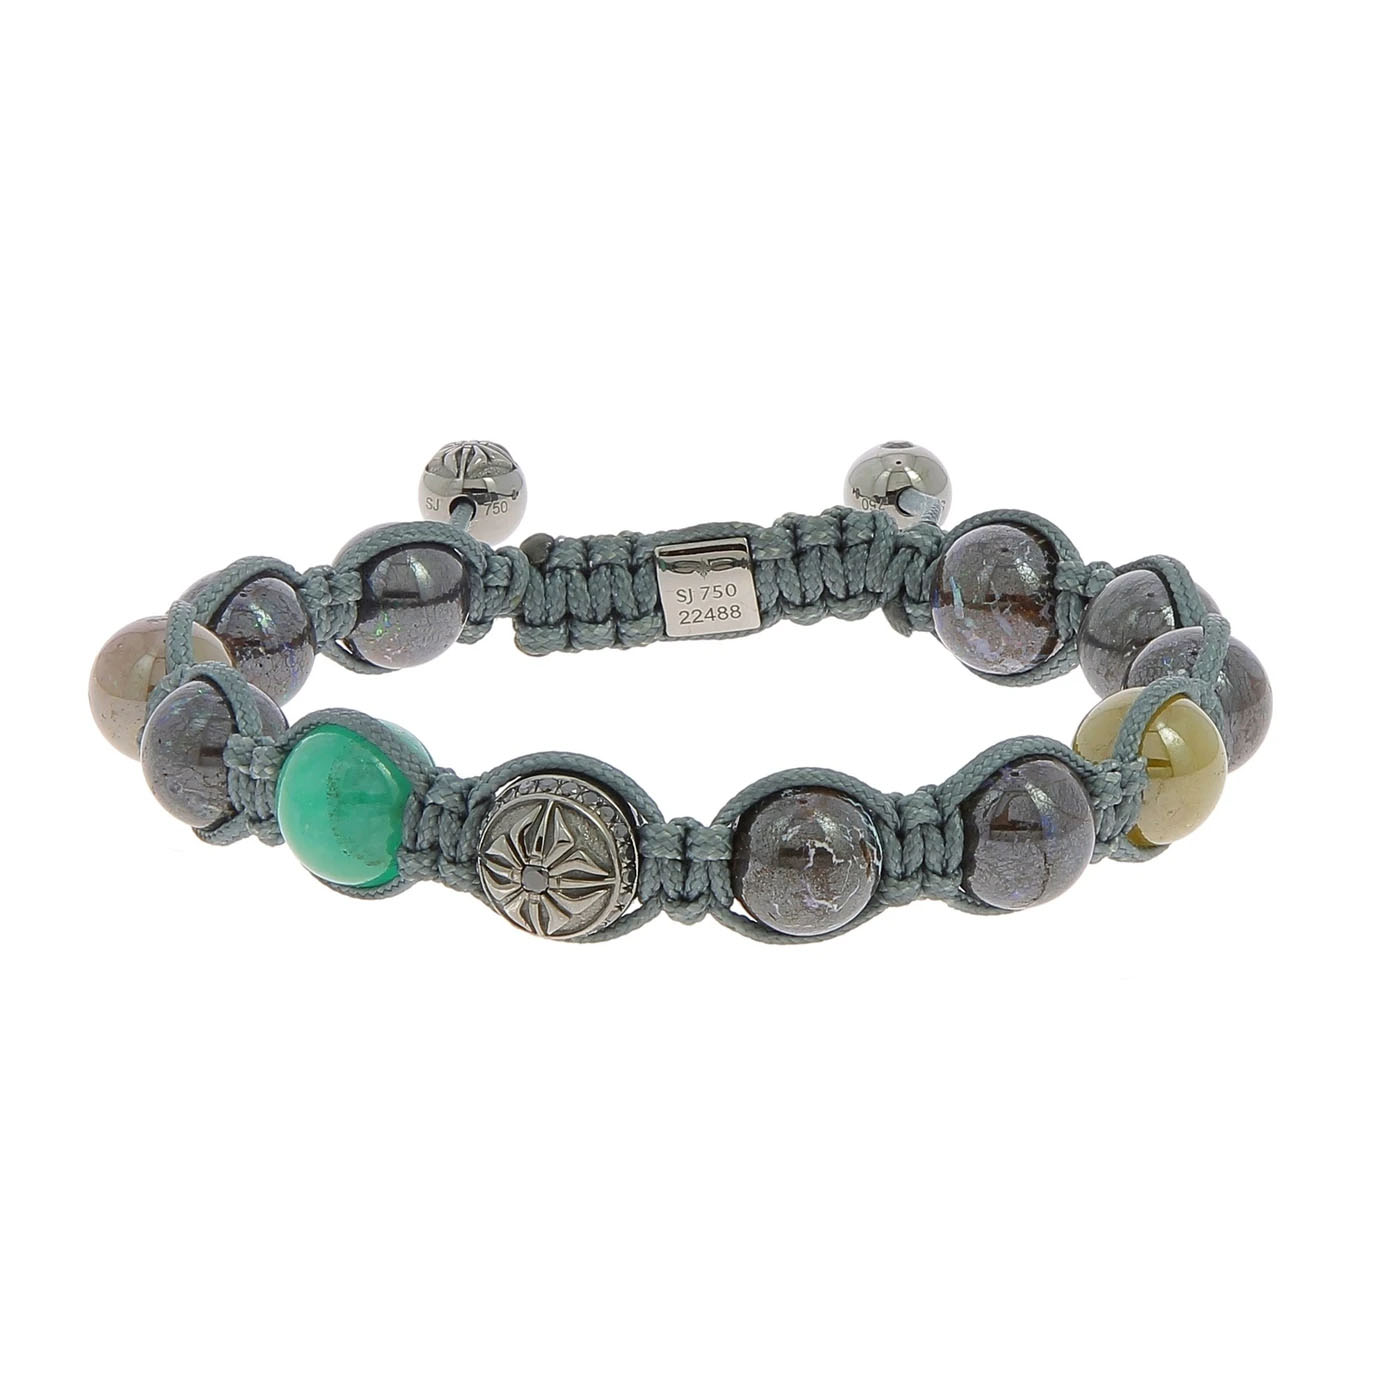 Wholesale bracelet for men make custom designed jewelry OEM/ODM Jewelry